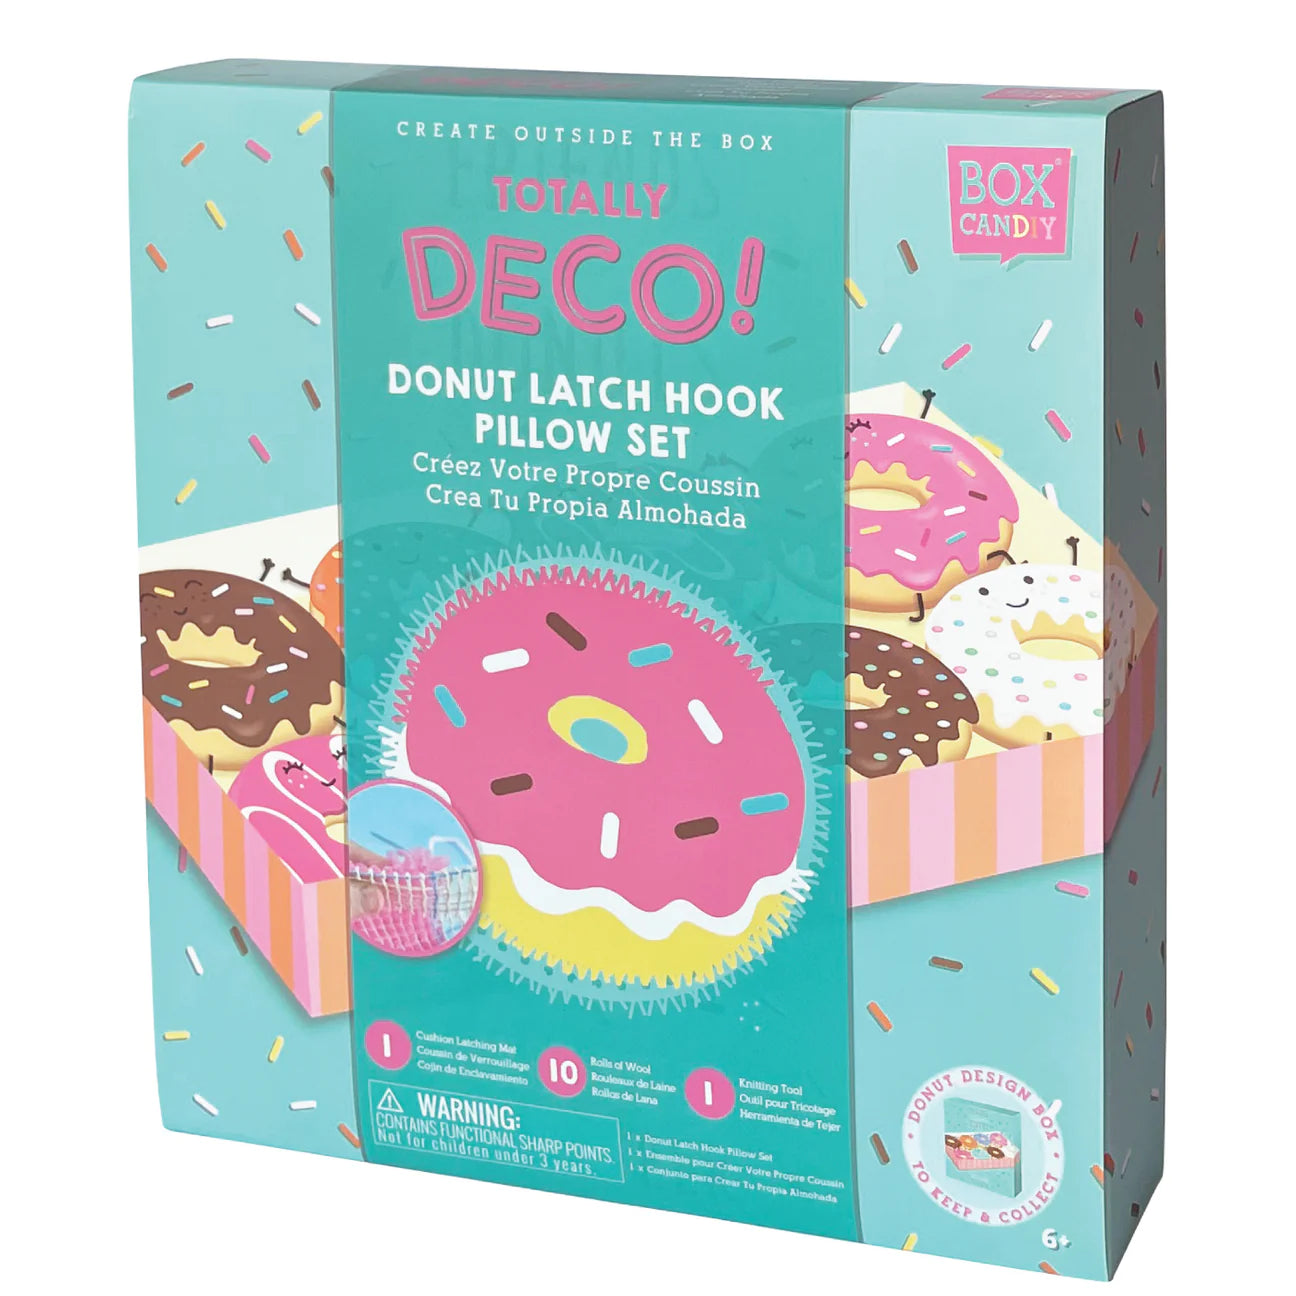 Deco! Donut Latch Hook Pillow Set by Box Candiy #BC-LTCHNUT